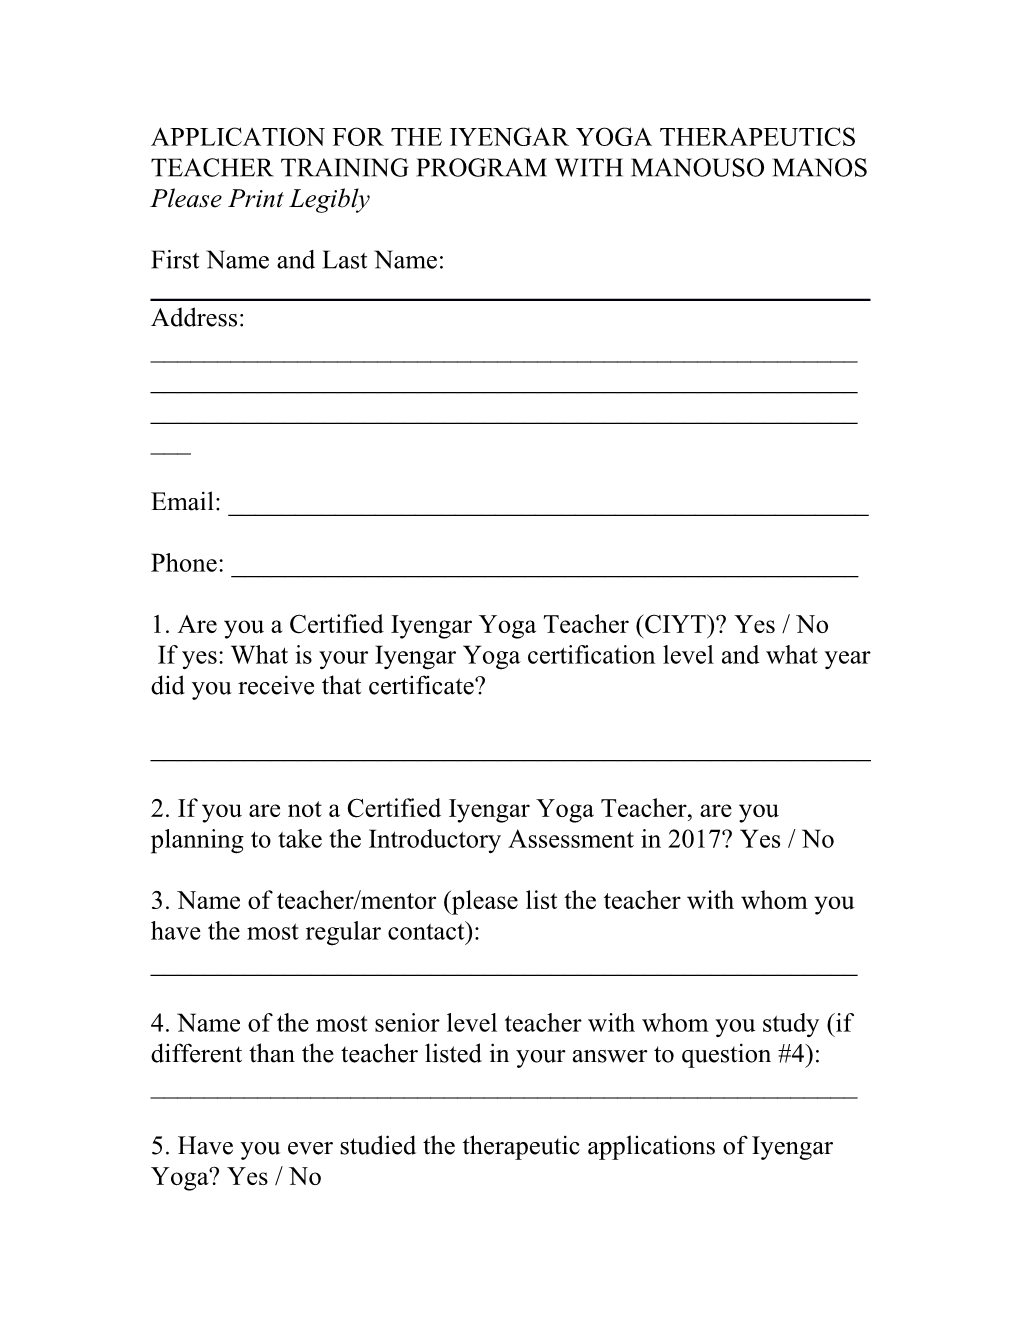 Application for the Iyengar Yoga Therapeutics Teacher Training Programwith Manouso Manos